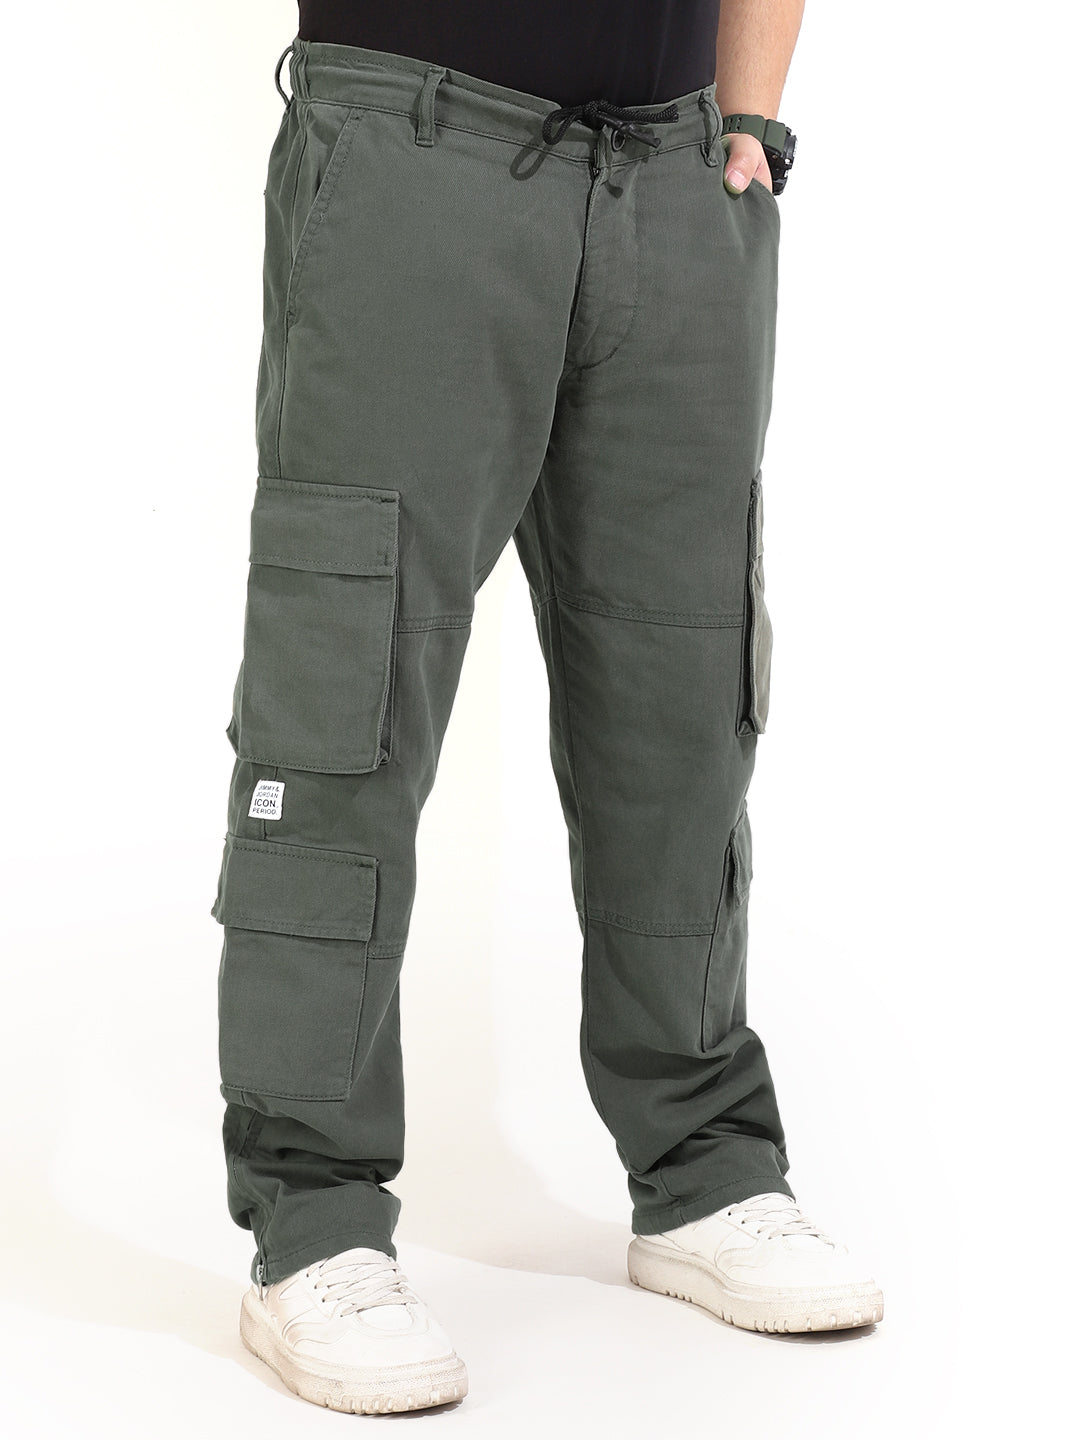 Paratrooper 8 Pocket Vintage-Military Style Camo Cargo Pants 20%OFF SALE! |  eBay